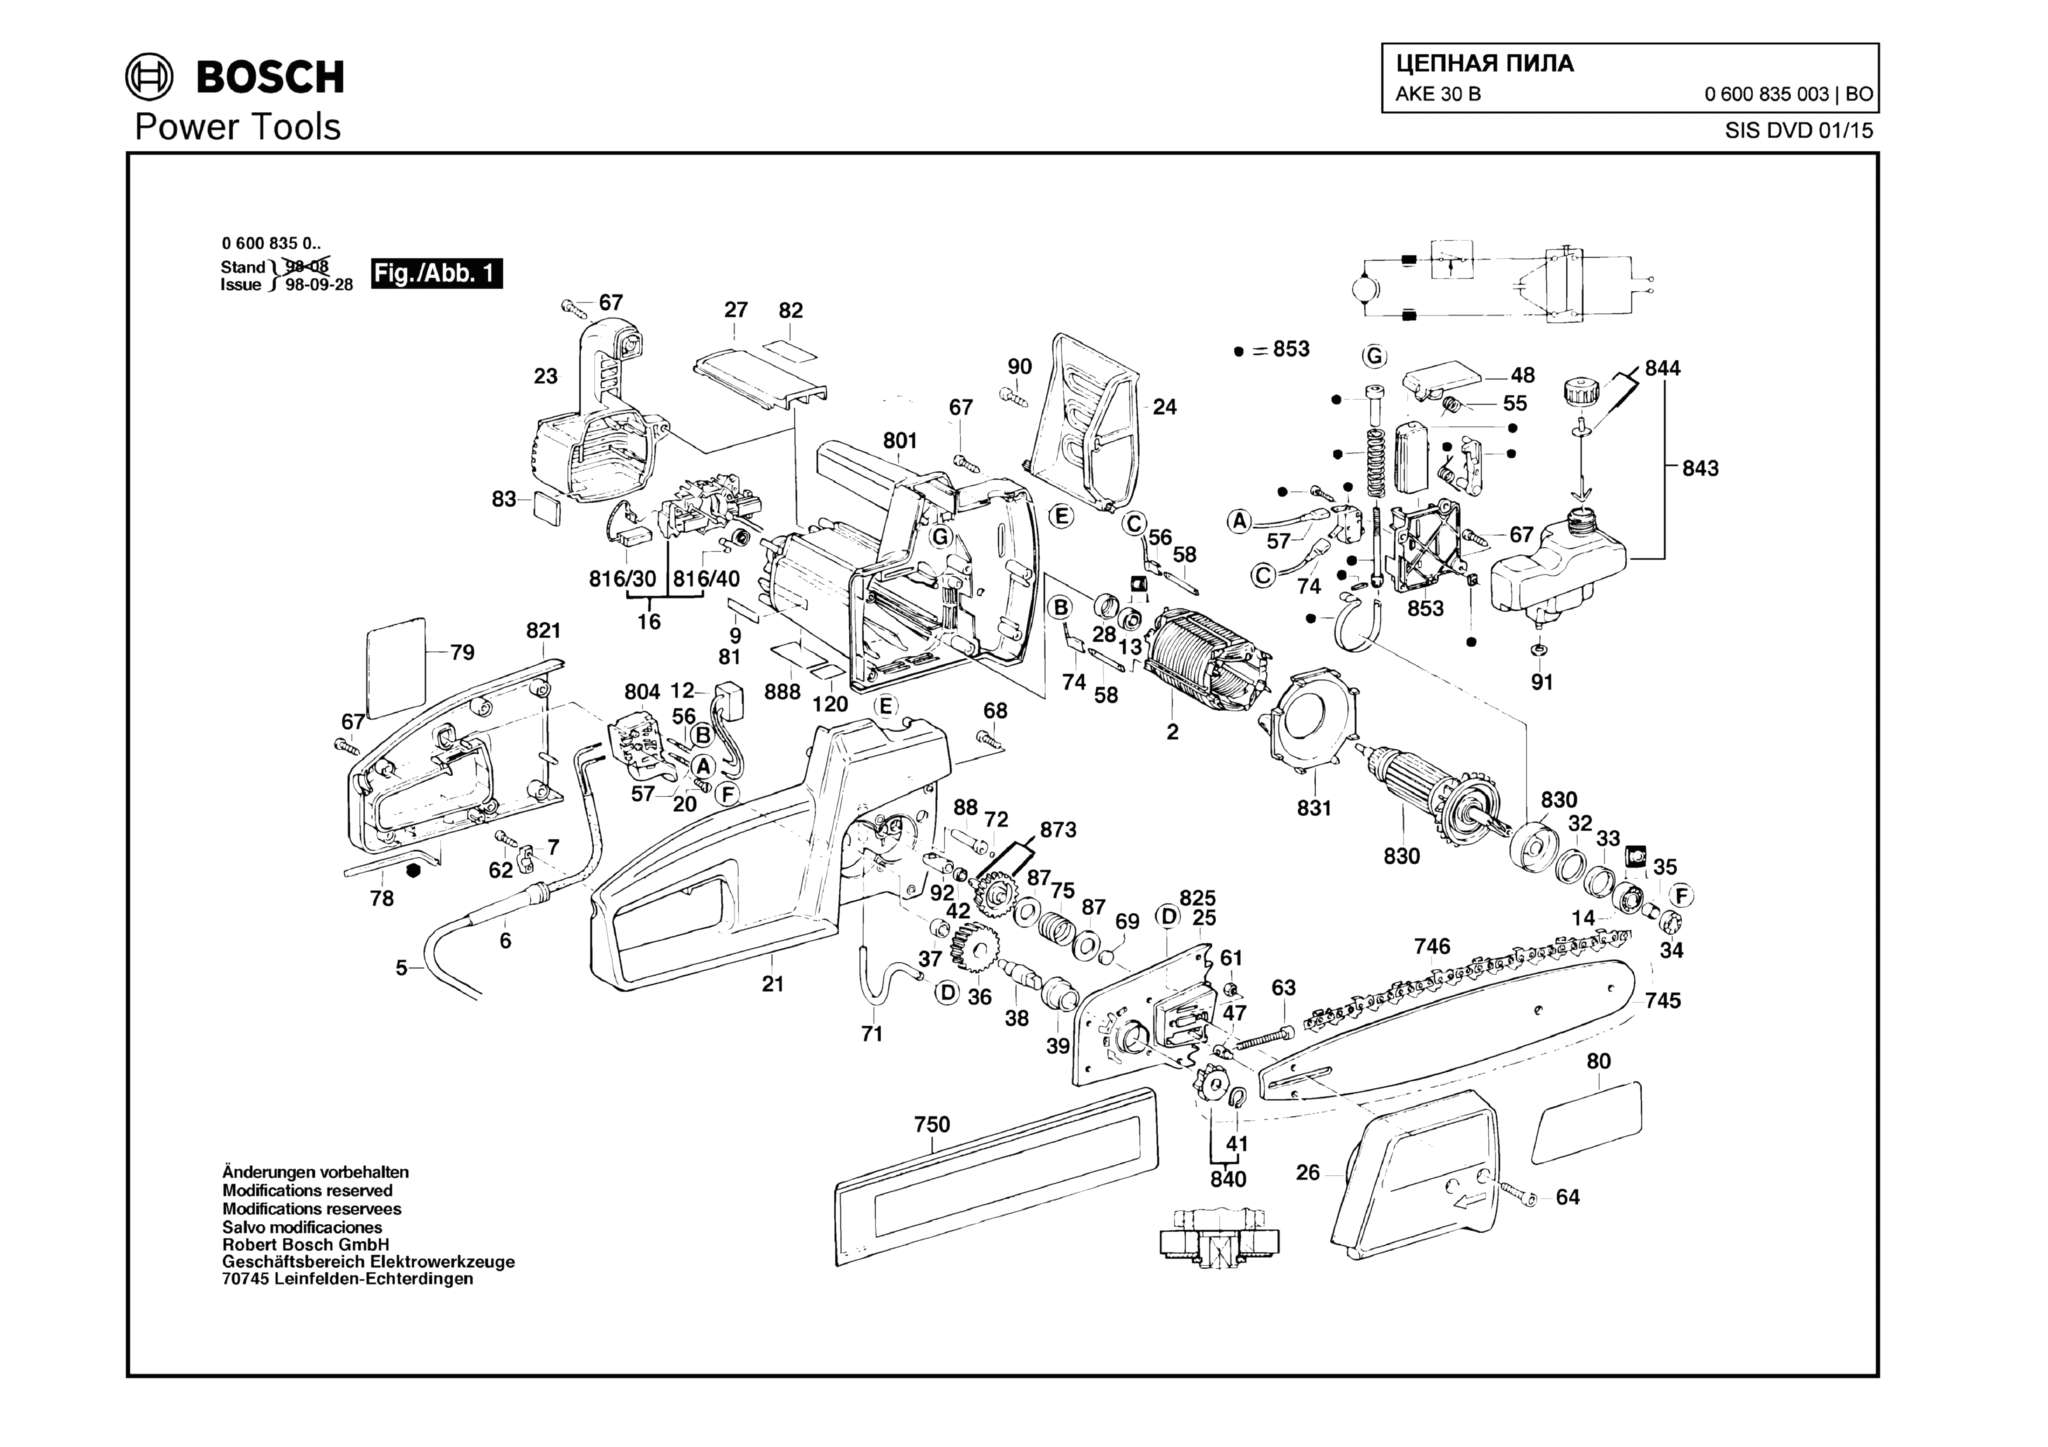 Запчасти, схема и деталировка Bosch AKE 30 B (ТИП 0600835003)